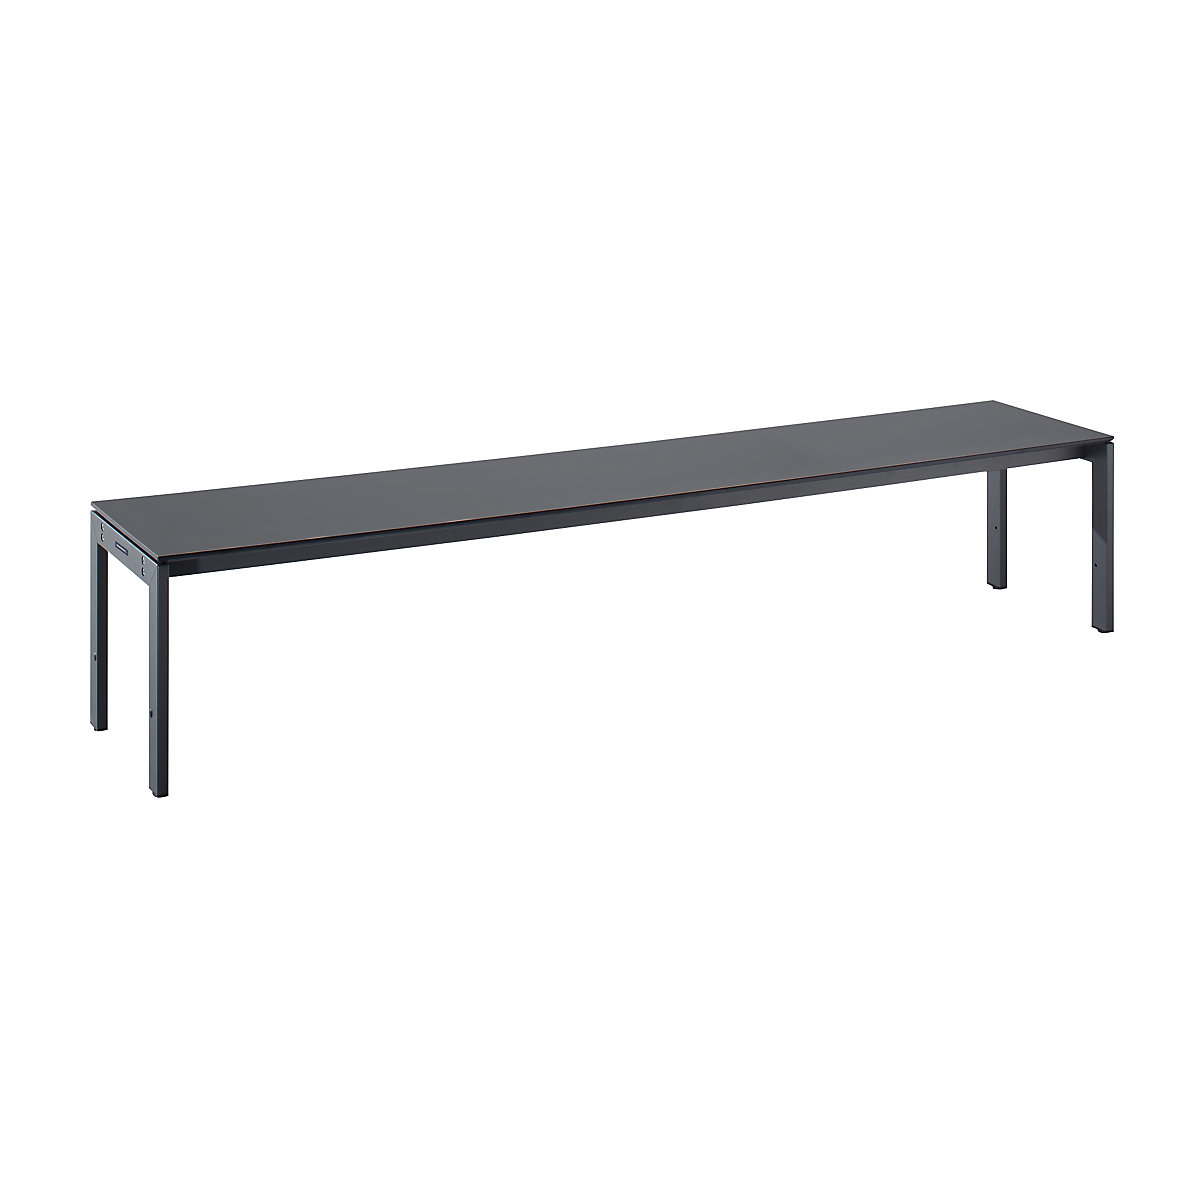 EUROKRAFTpro – Changing room bench with steel frame, LxHxD 2000 x 415 x 400 mm, basalt grey seat